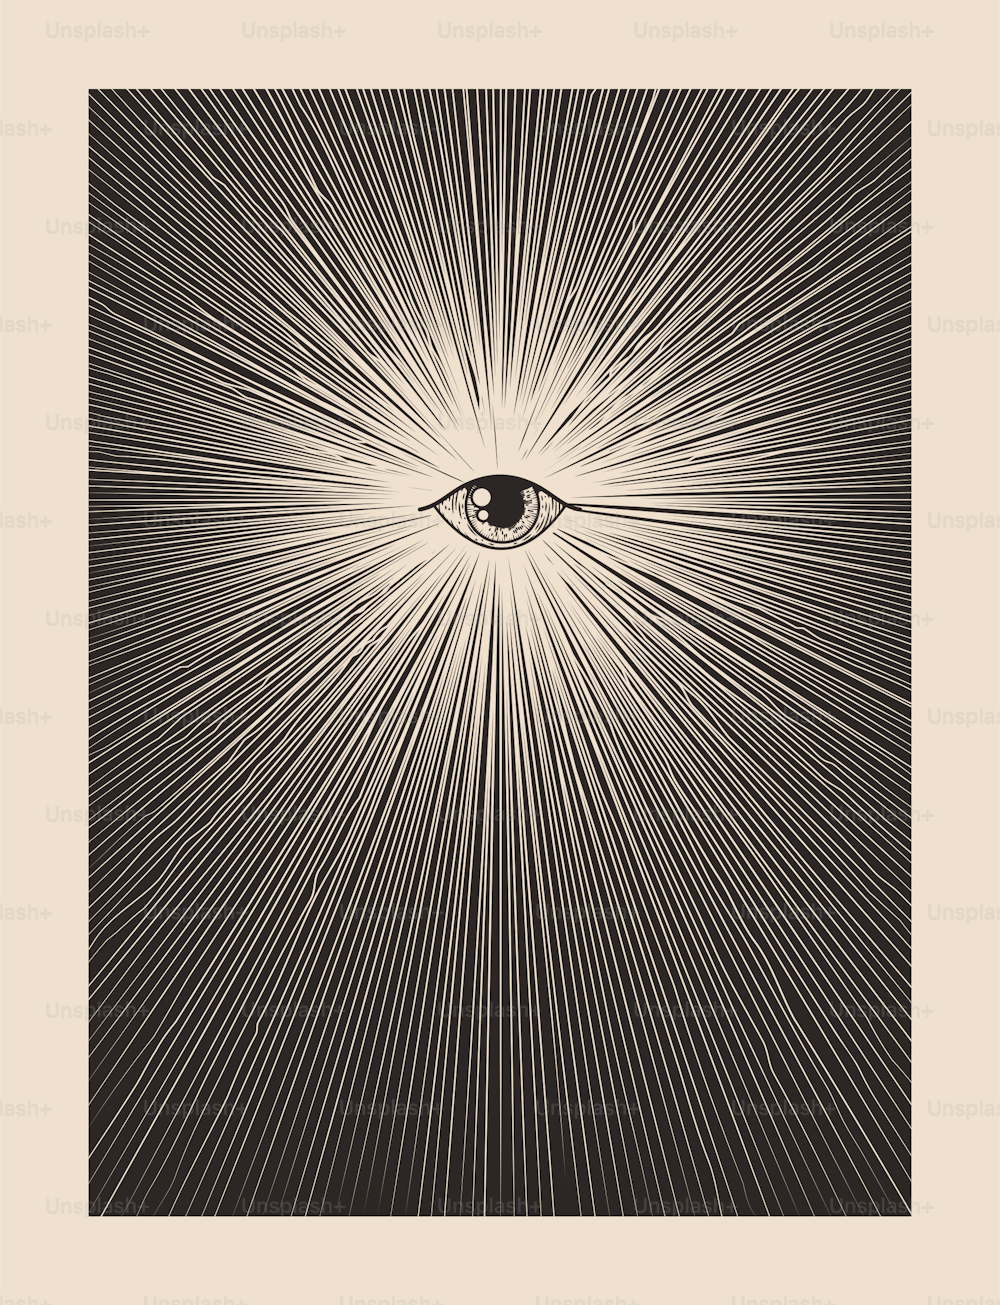 All seeing god eye vintage mystic mason print poster design template with eye surrounded sunburst. Vector eps 10 illustration